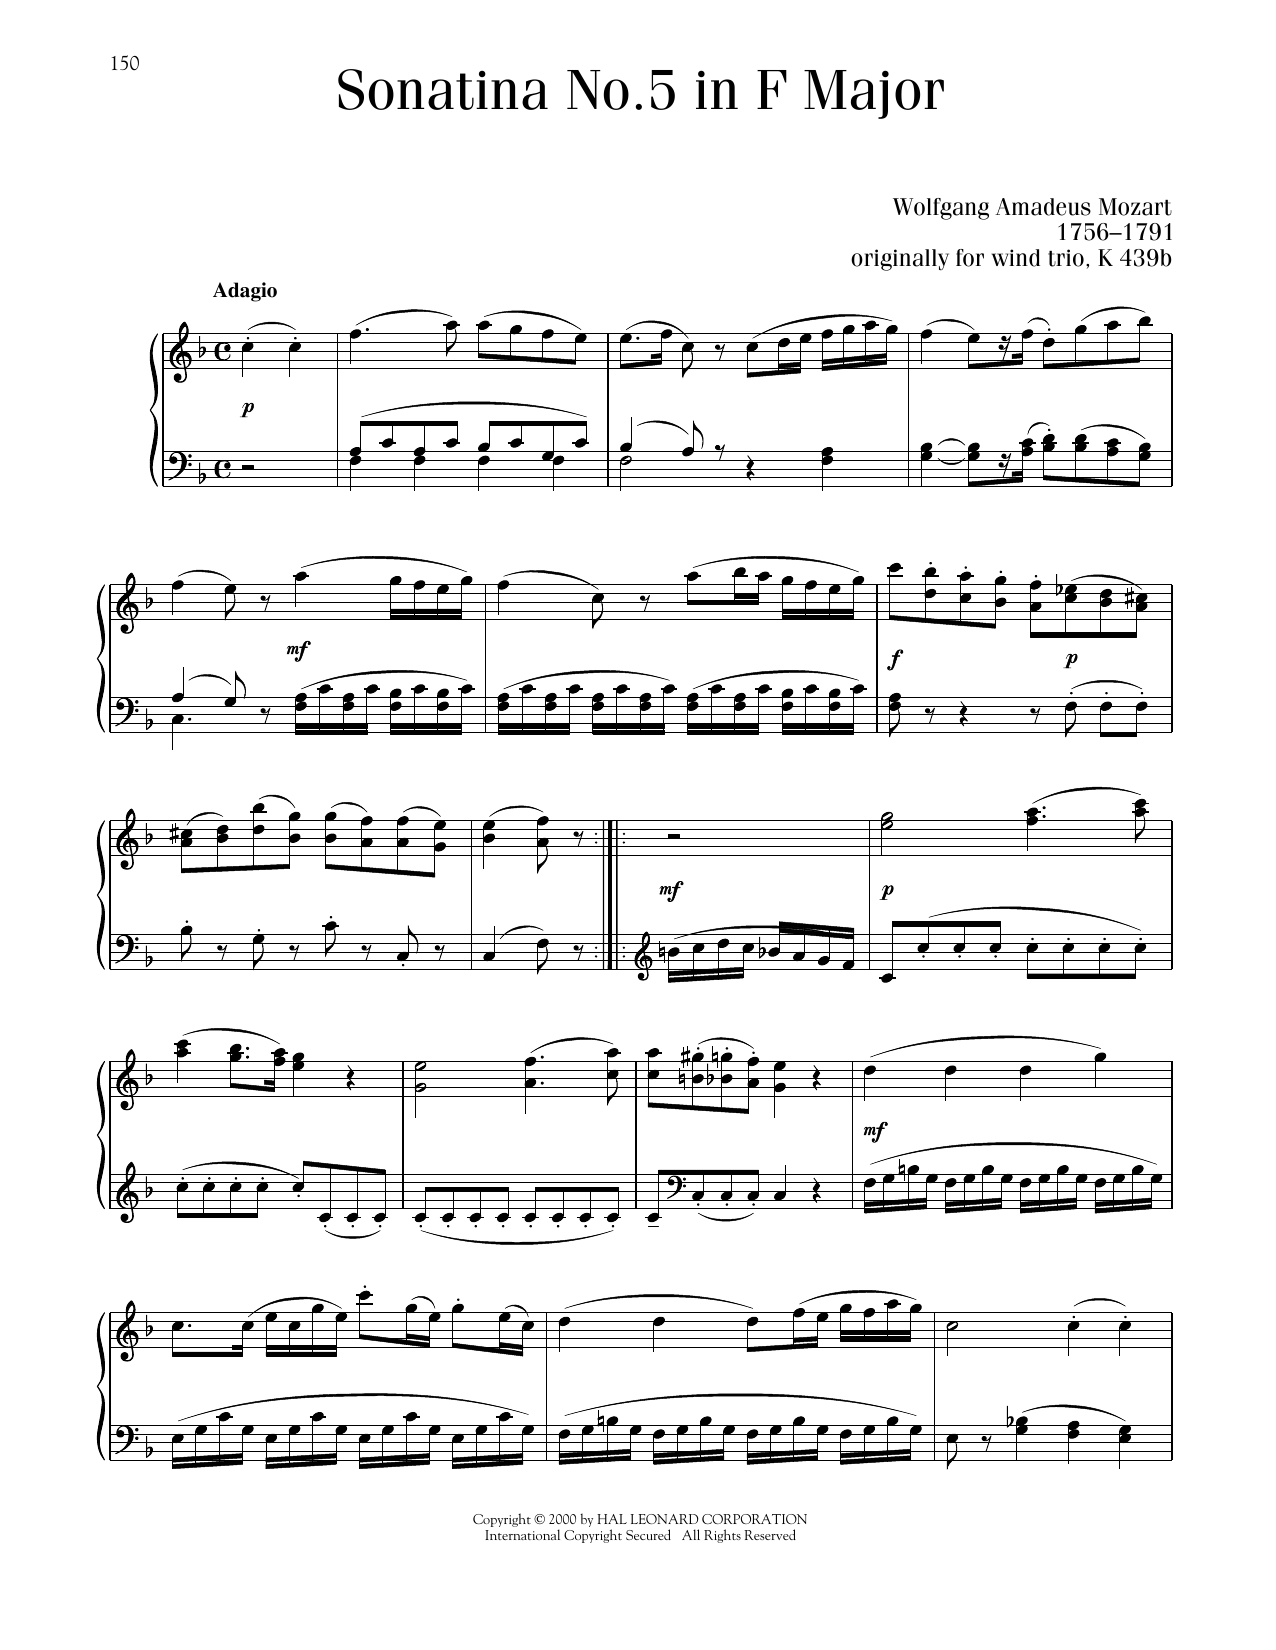 Wolfgang Amadeus Mozart Sonatina No. 5 In F Major sheet music notes printable PDF score